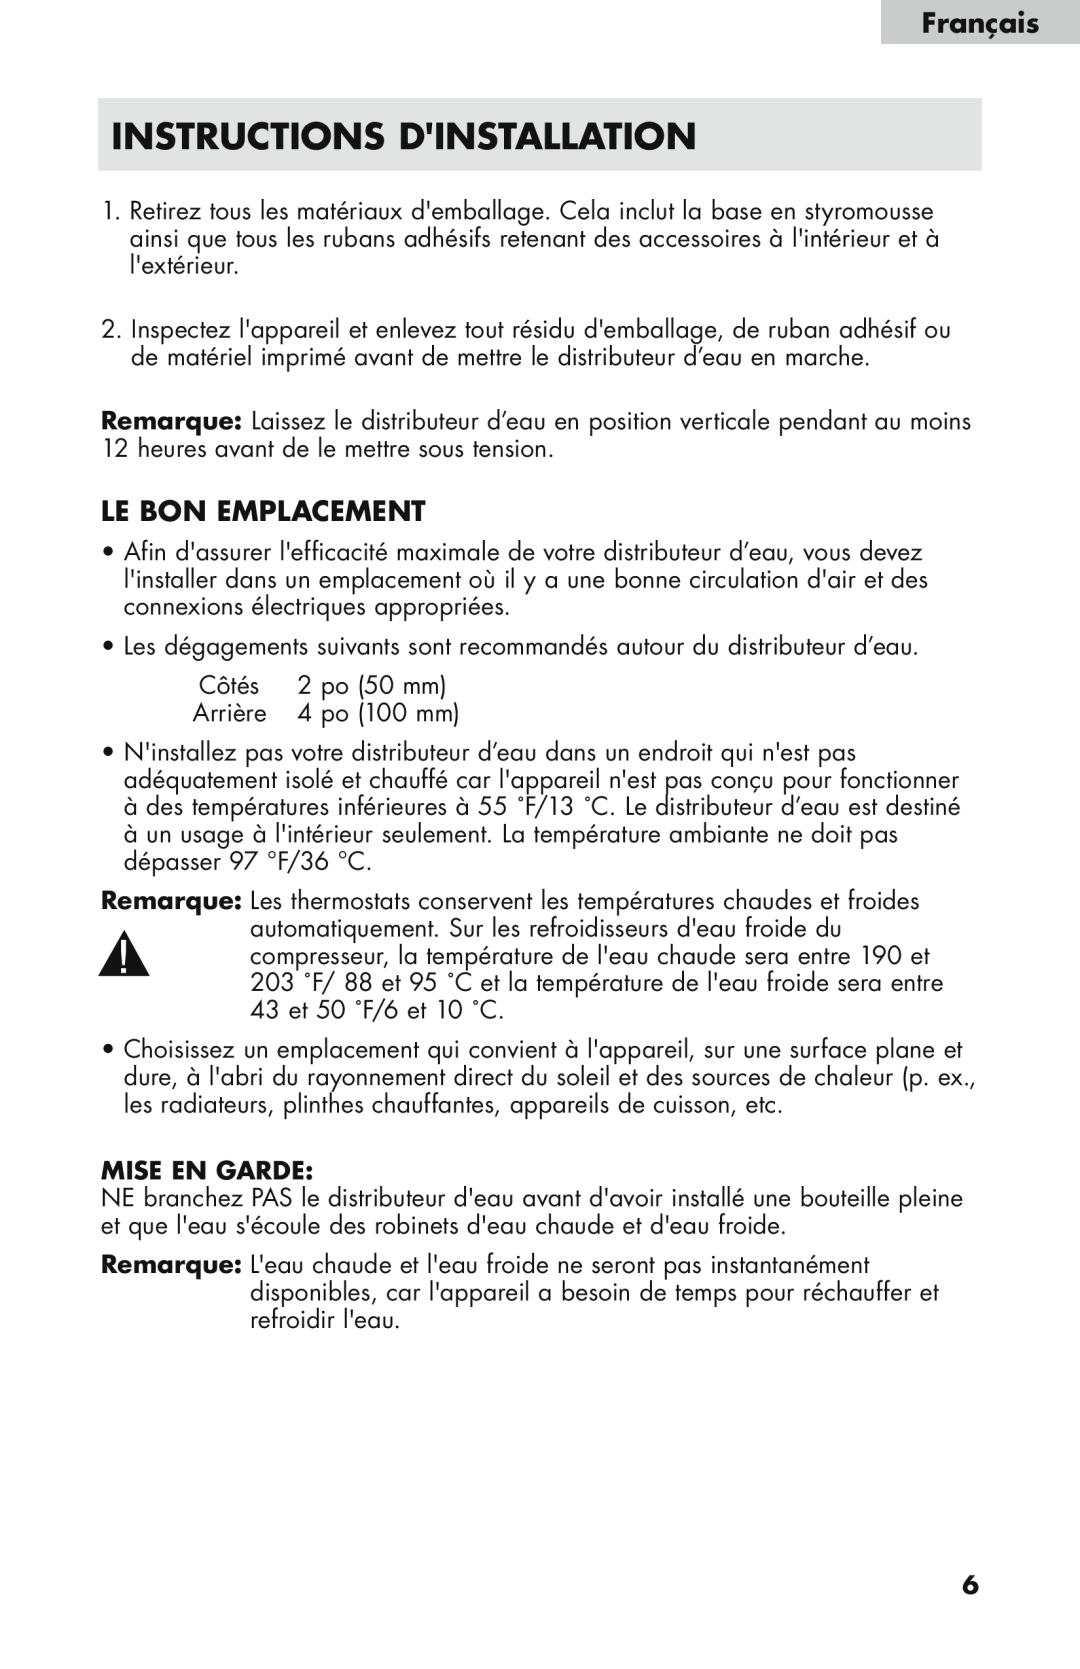 Haier WDNS32BW, WDNS121SS, WDNS115BW user manual Instructions Dinstallation, Le Bon Emplacement, Français 